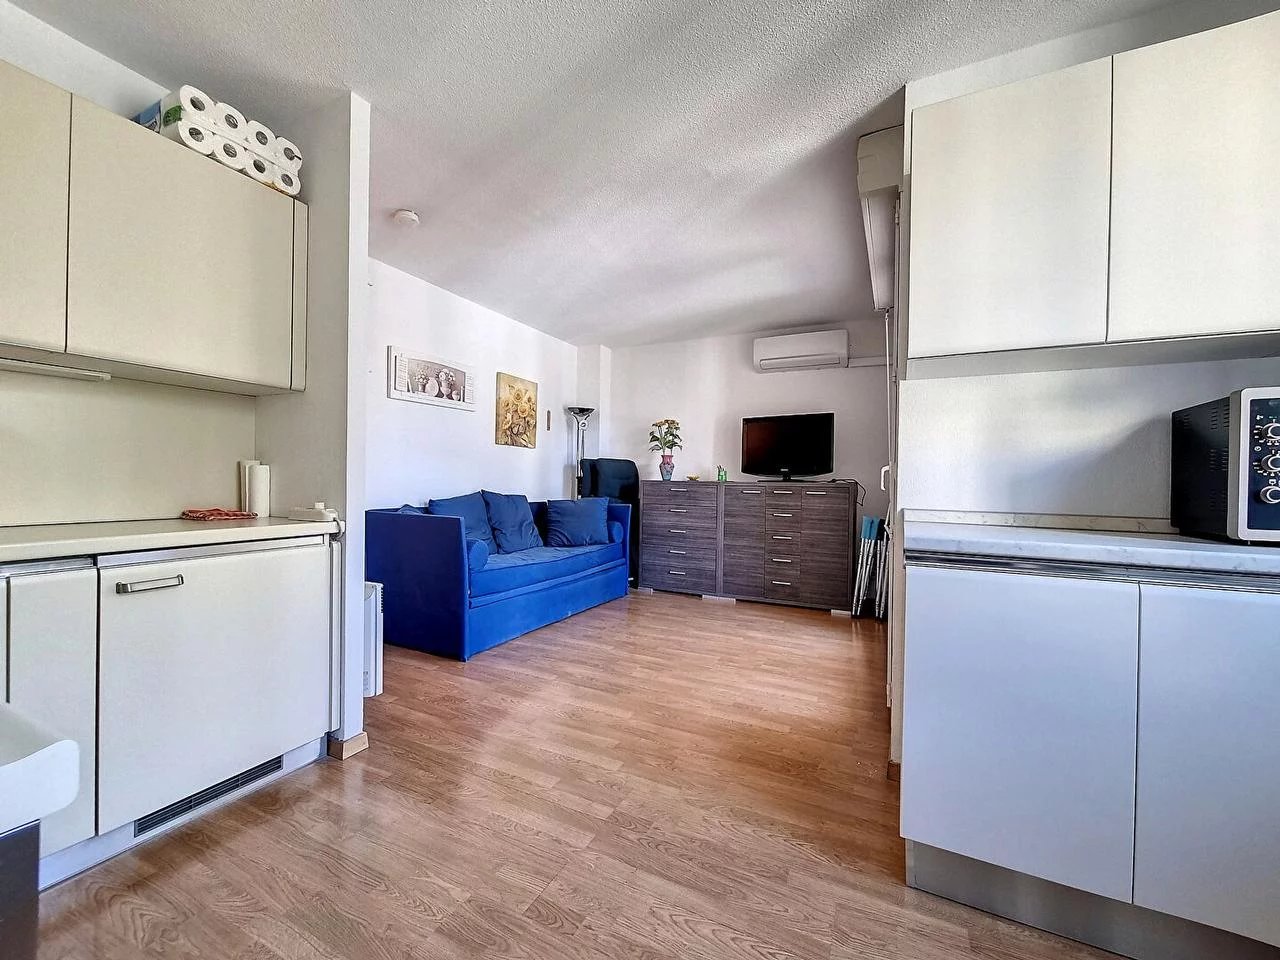 Appartement  2 Locali 30.57m2  In vendita   230 000 €